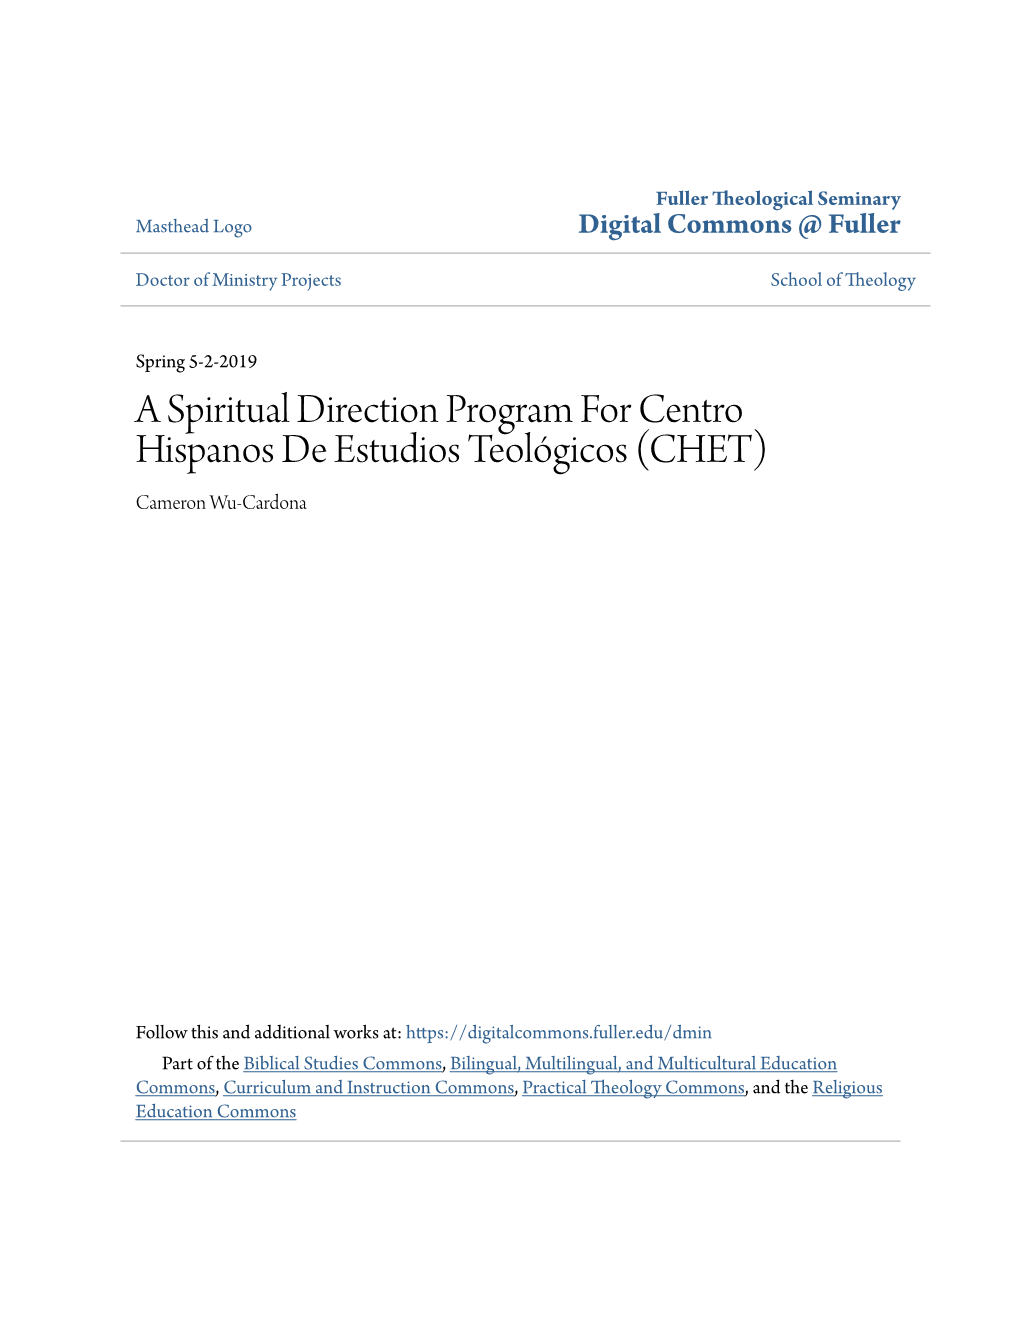 A Spiritual Direction Program for Centro Hispanos De Estudios Teológicos (CHET) Cameron Wu-Cardona